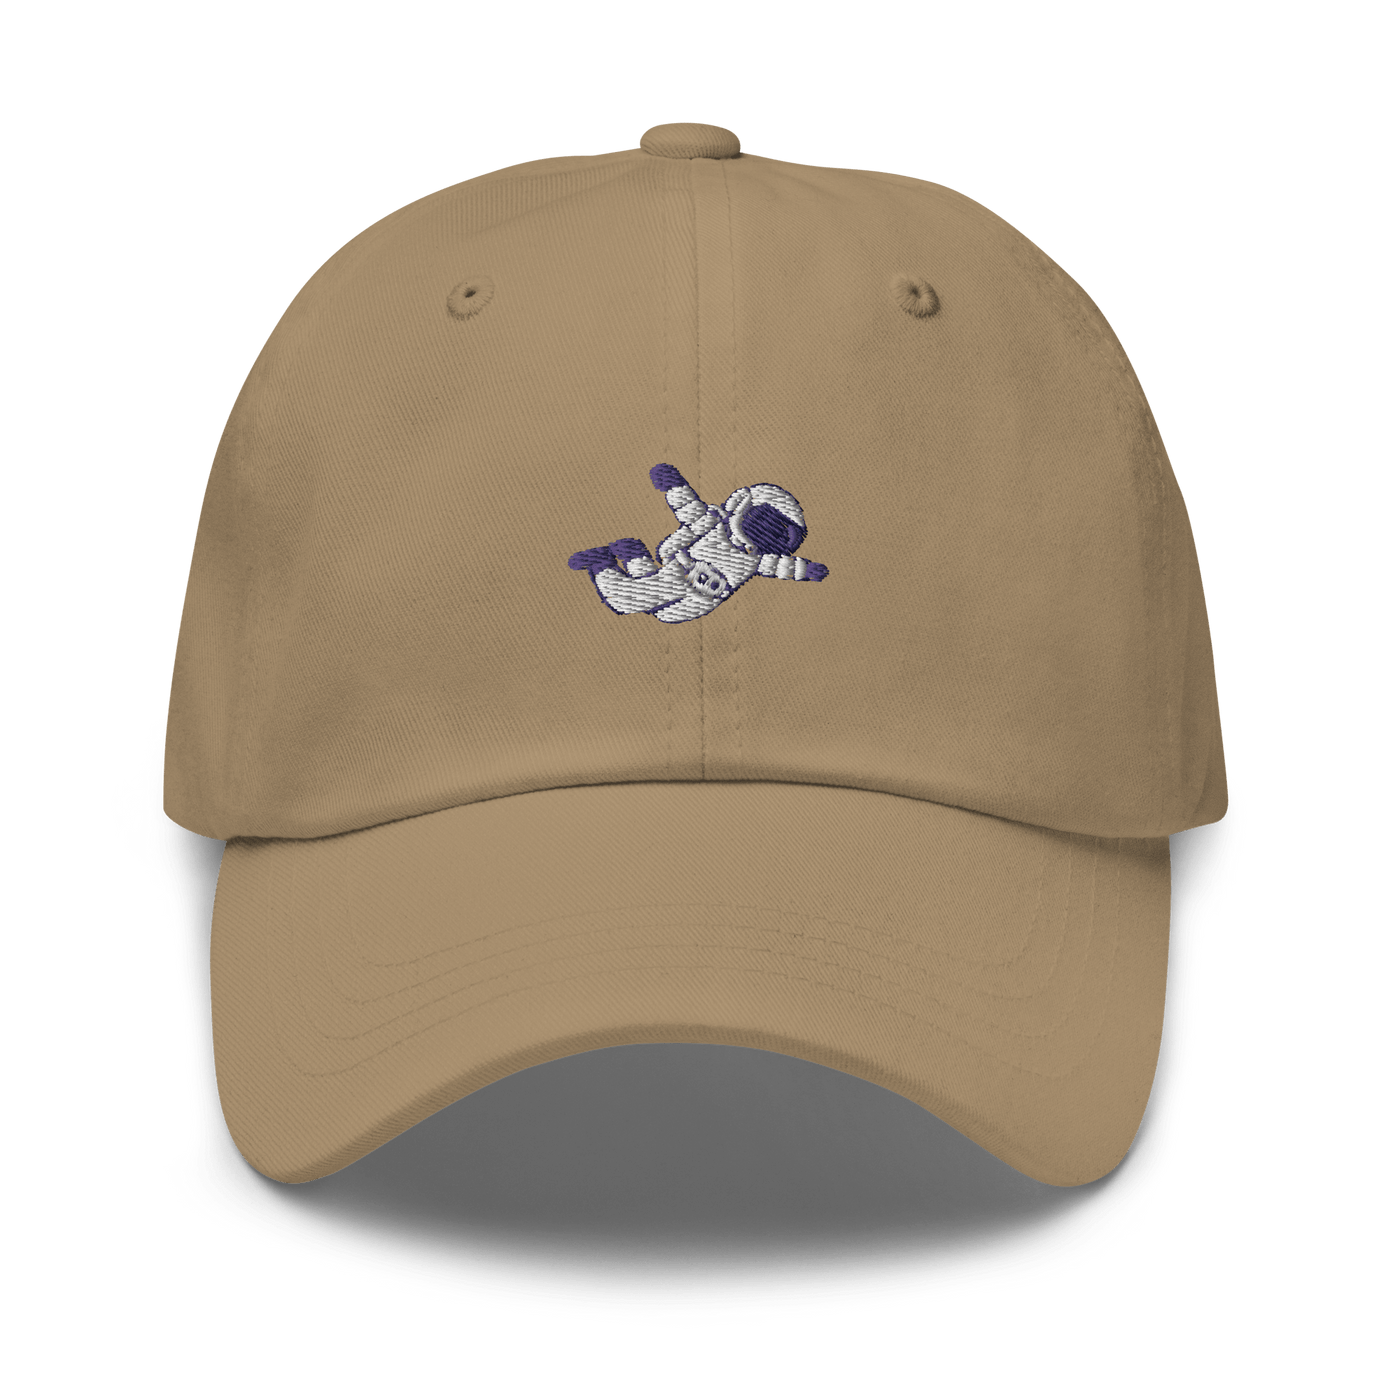 Astronaut Dad hat - Khaki - - Just Another Cap Store